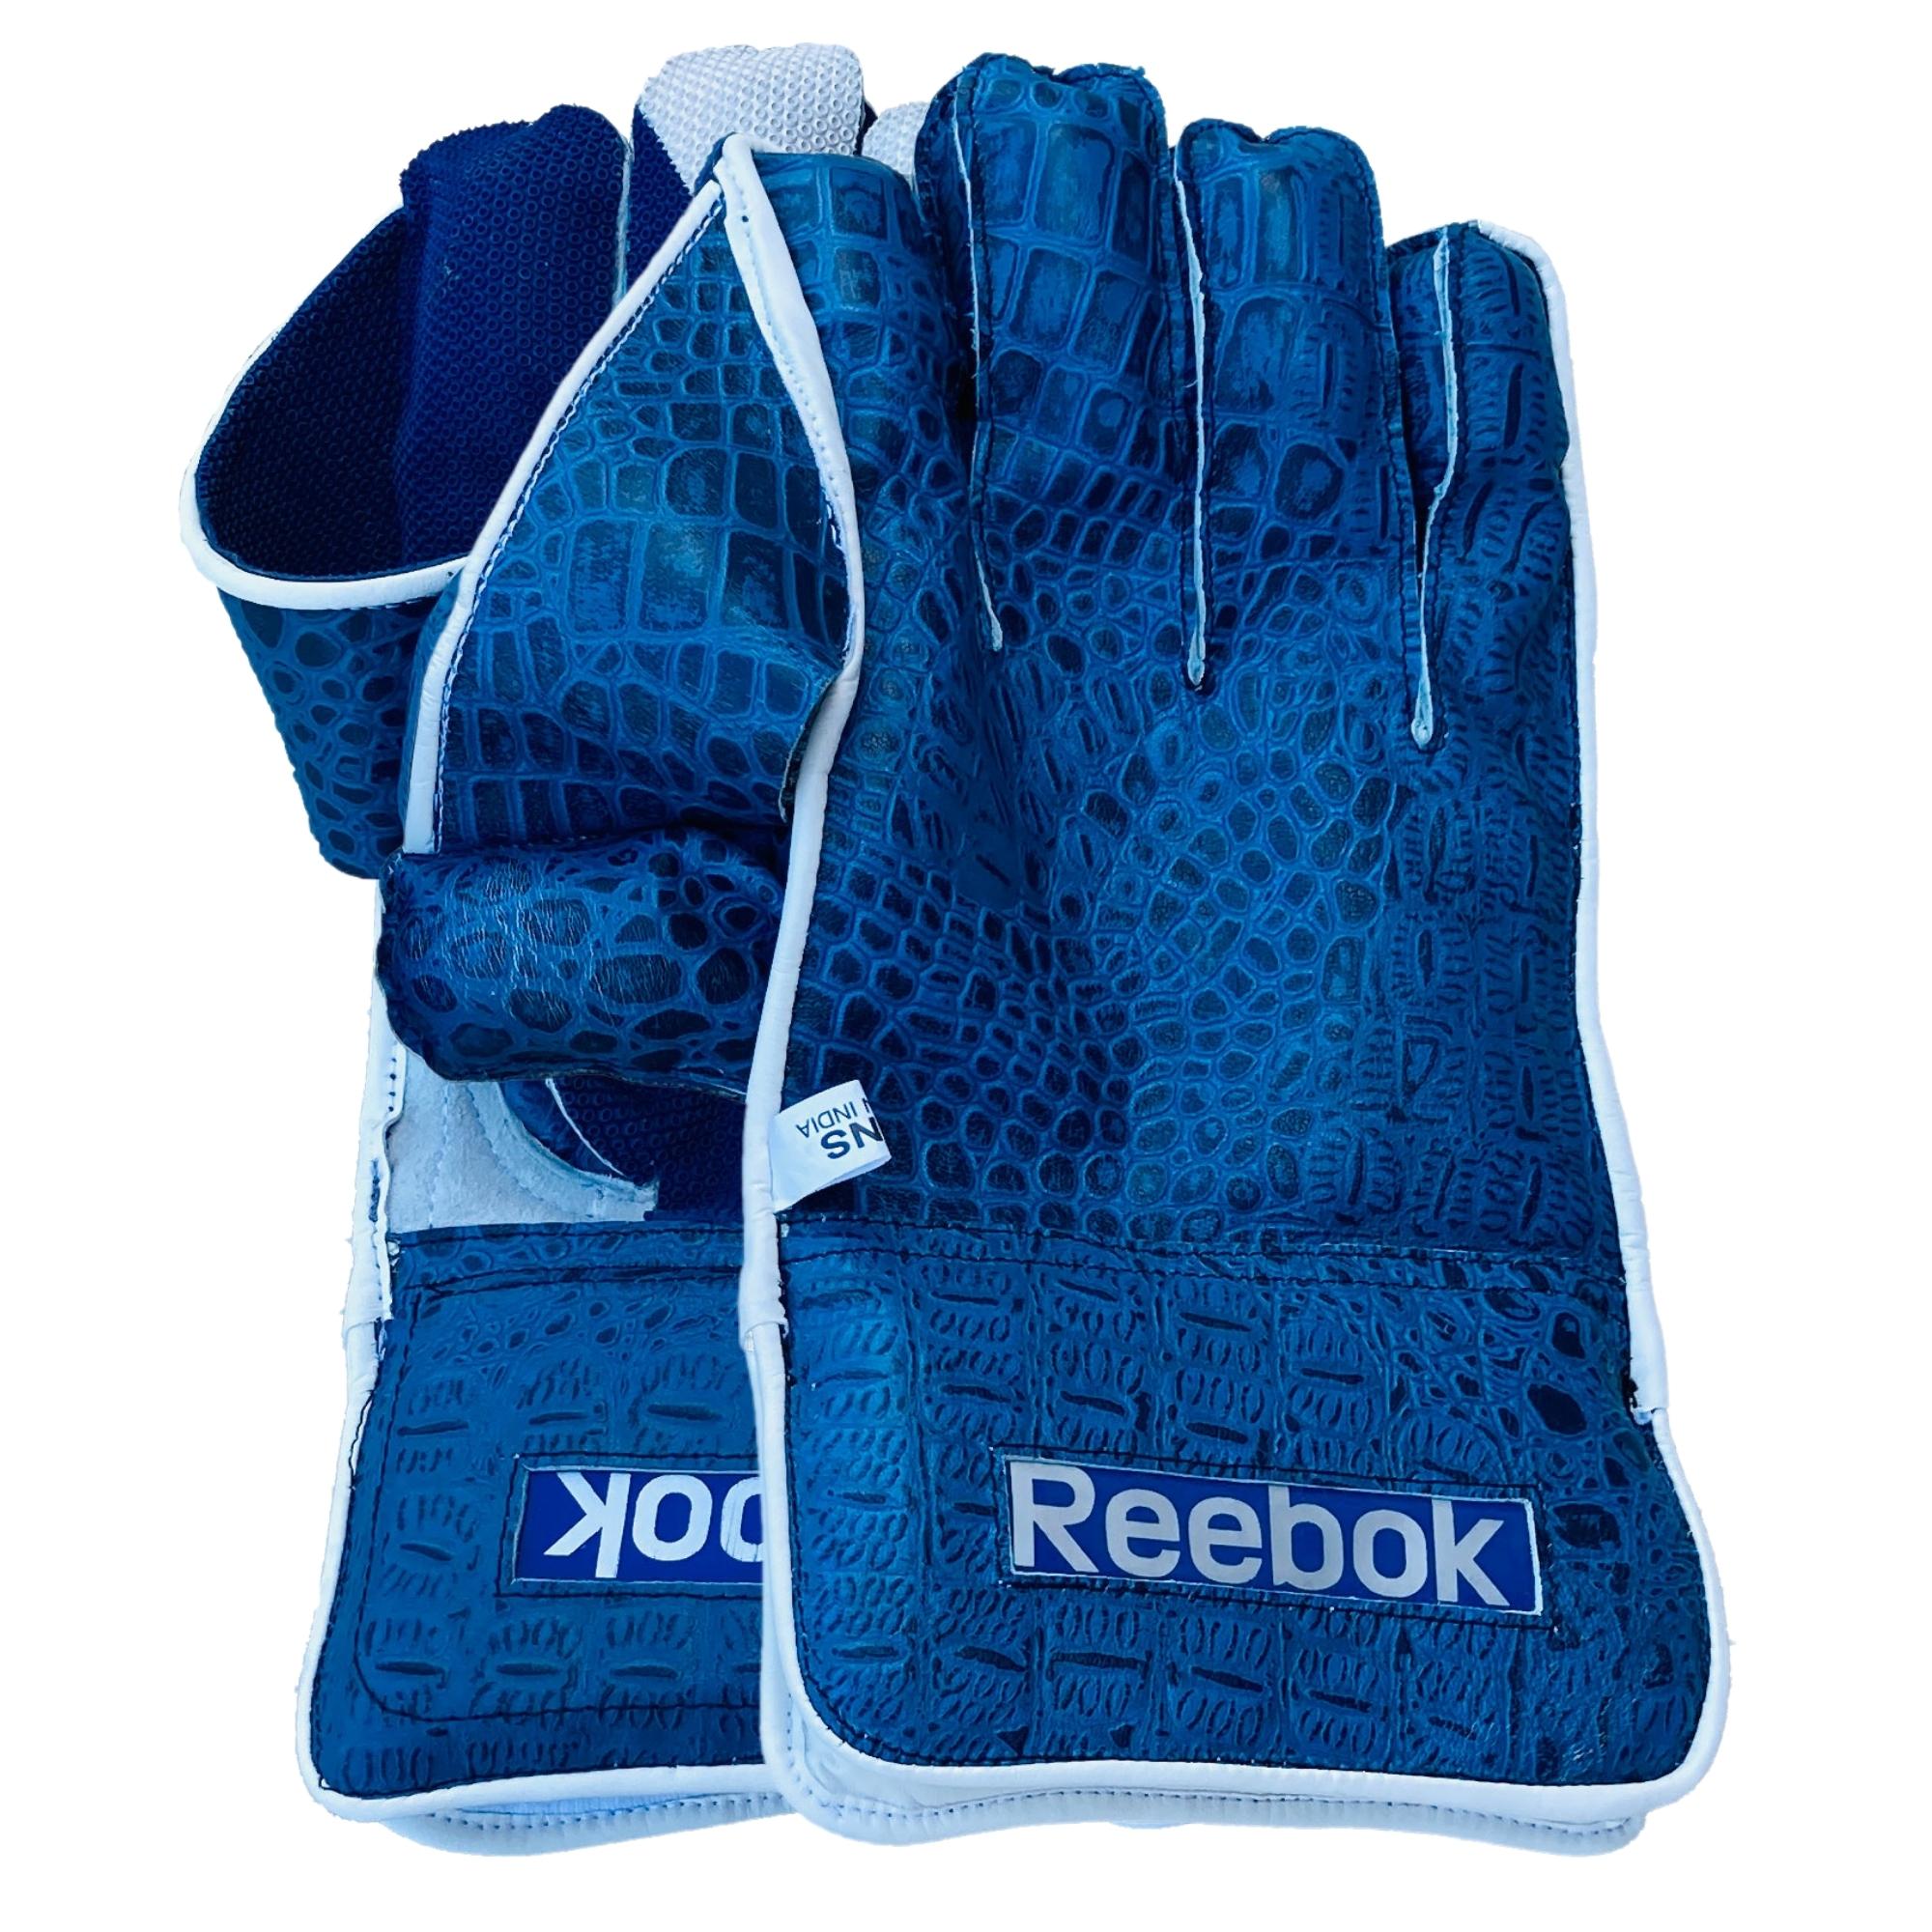 Reebok Wicket Keeping Gloves | Reebok Blue and White